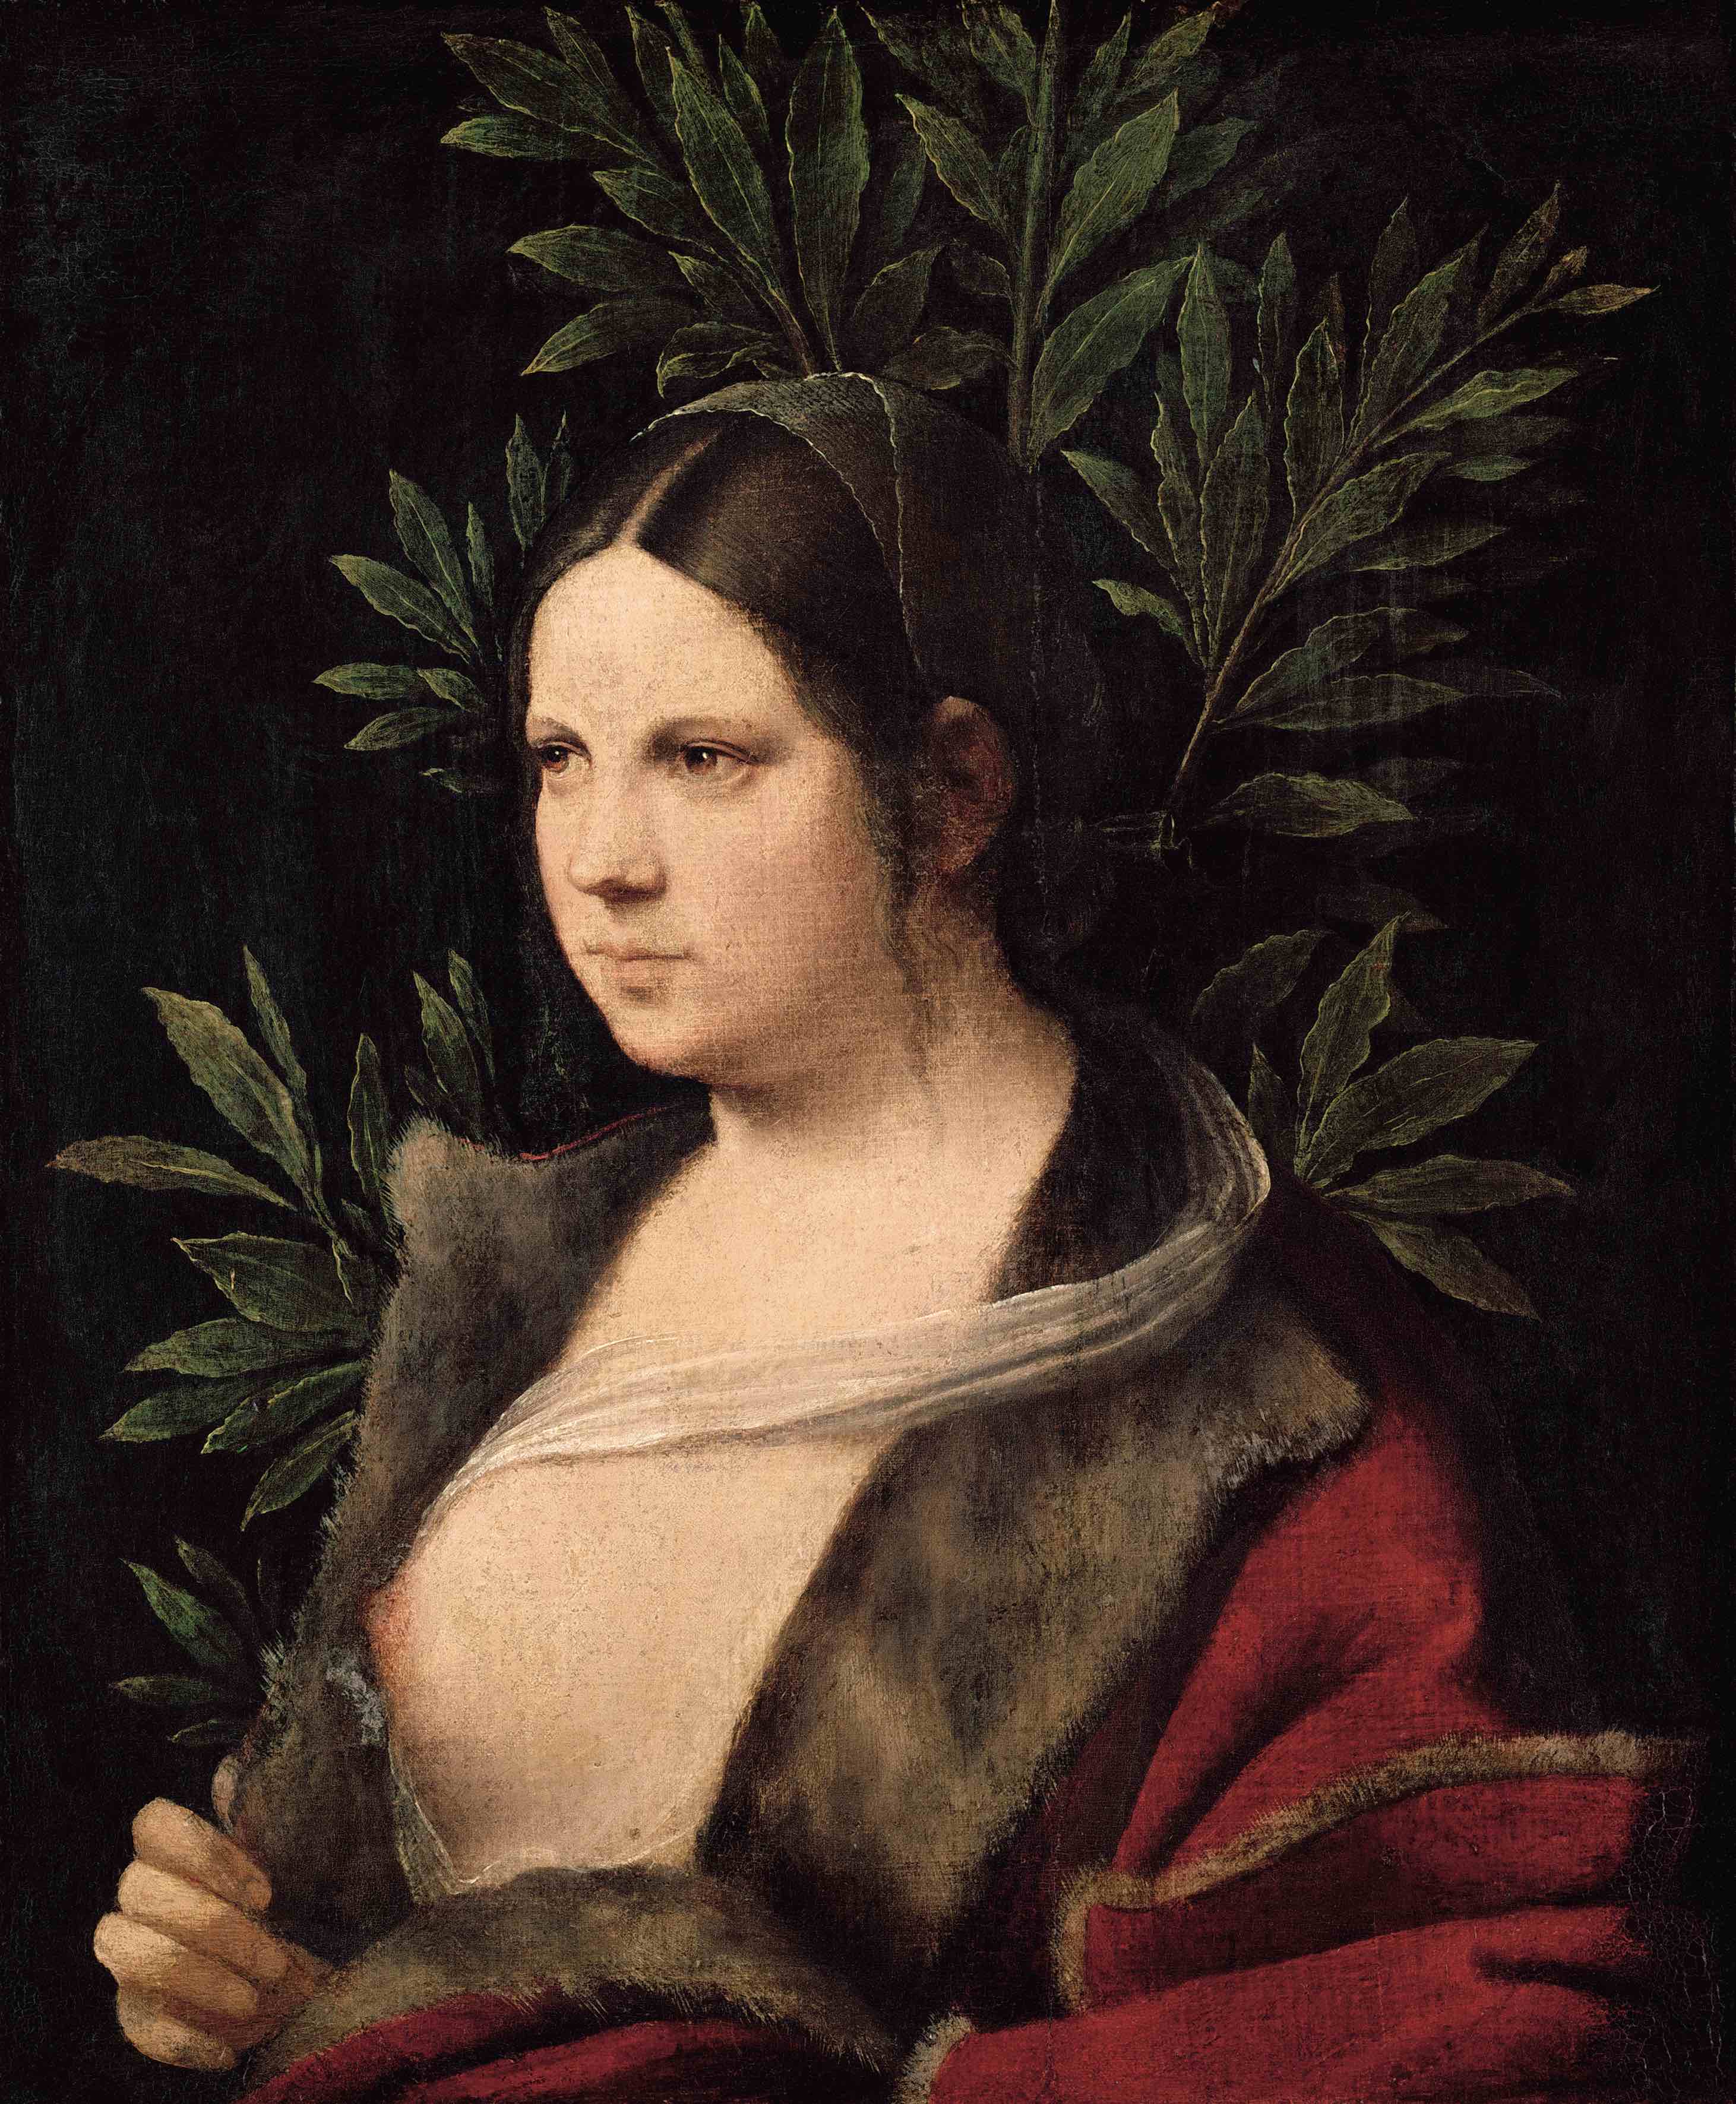 Giorgione, Laura (1506; olio su tela su legno di abete, 41 x 33,6 cm; Vienna, Kunsthistorisches Museum)
